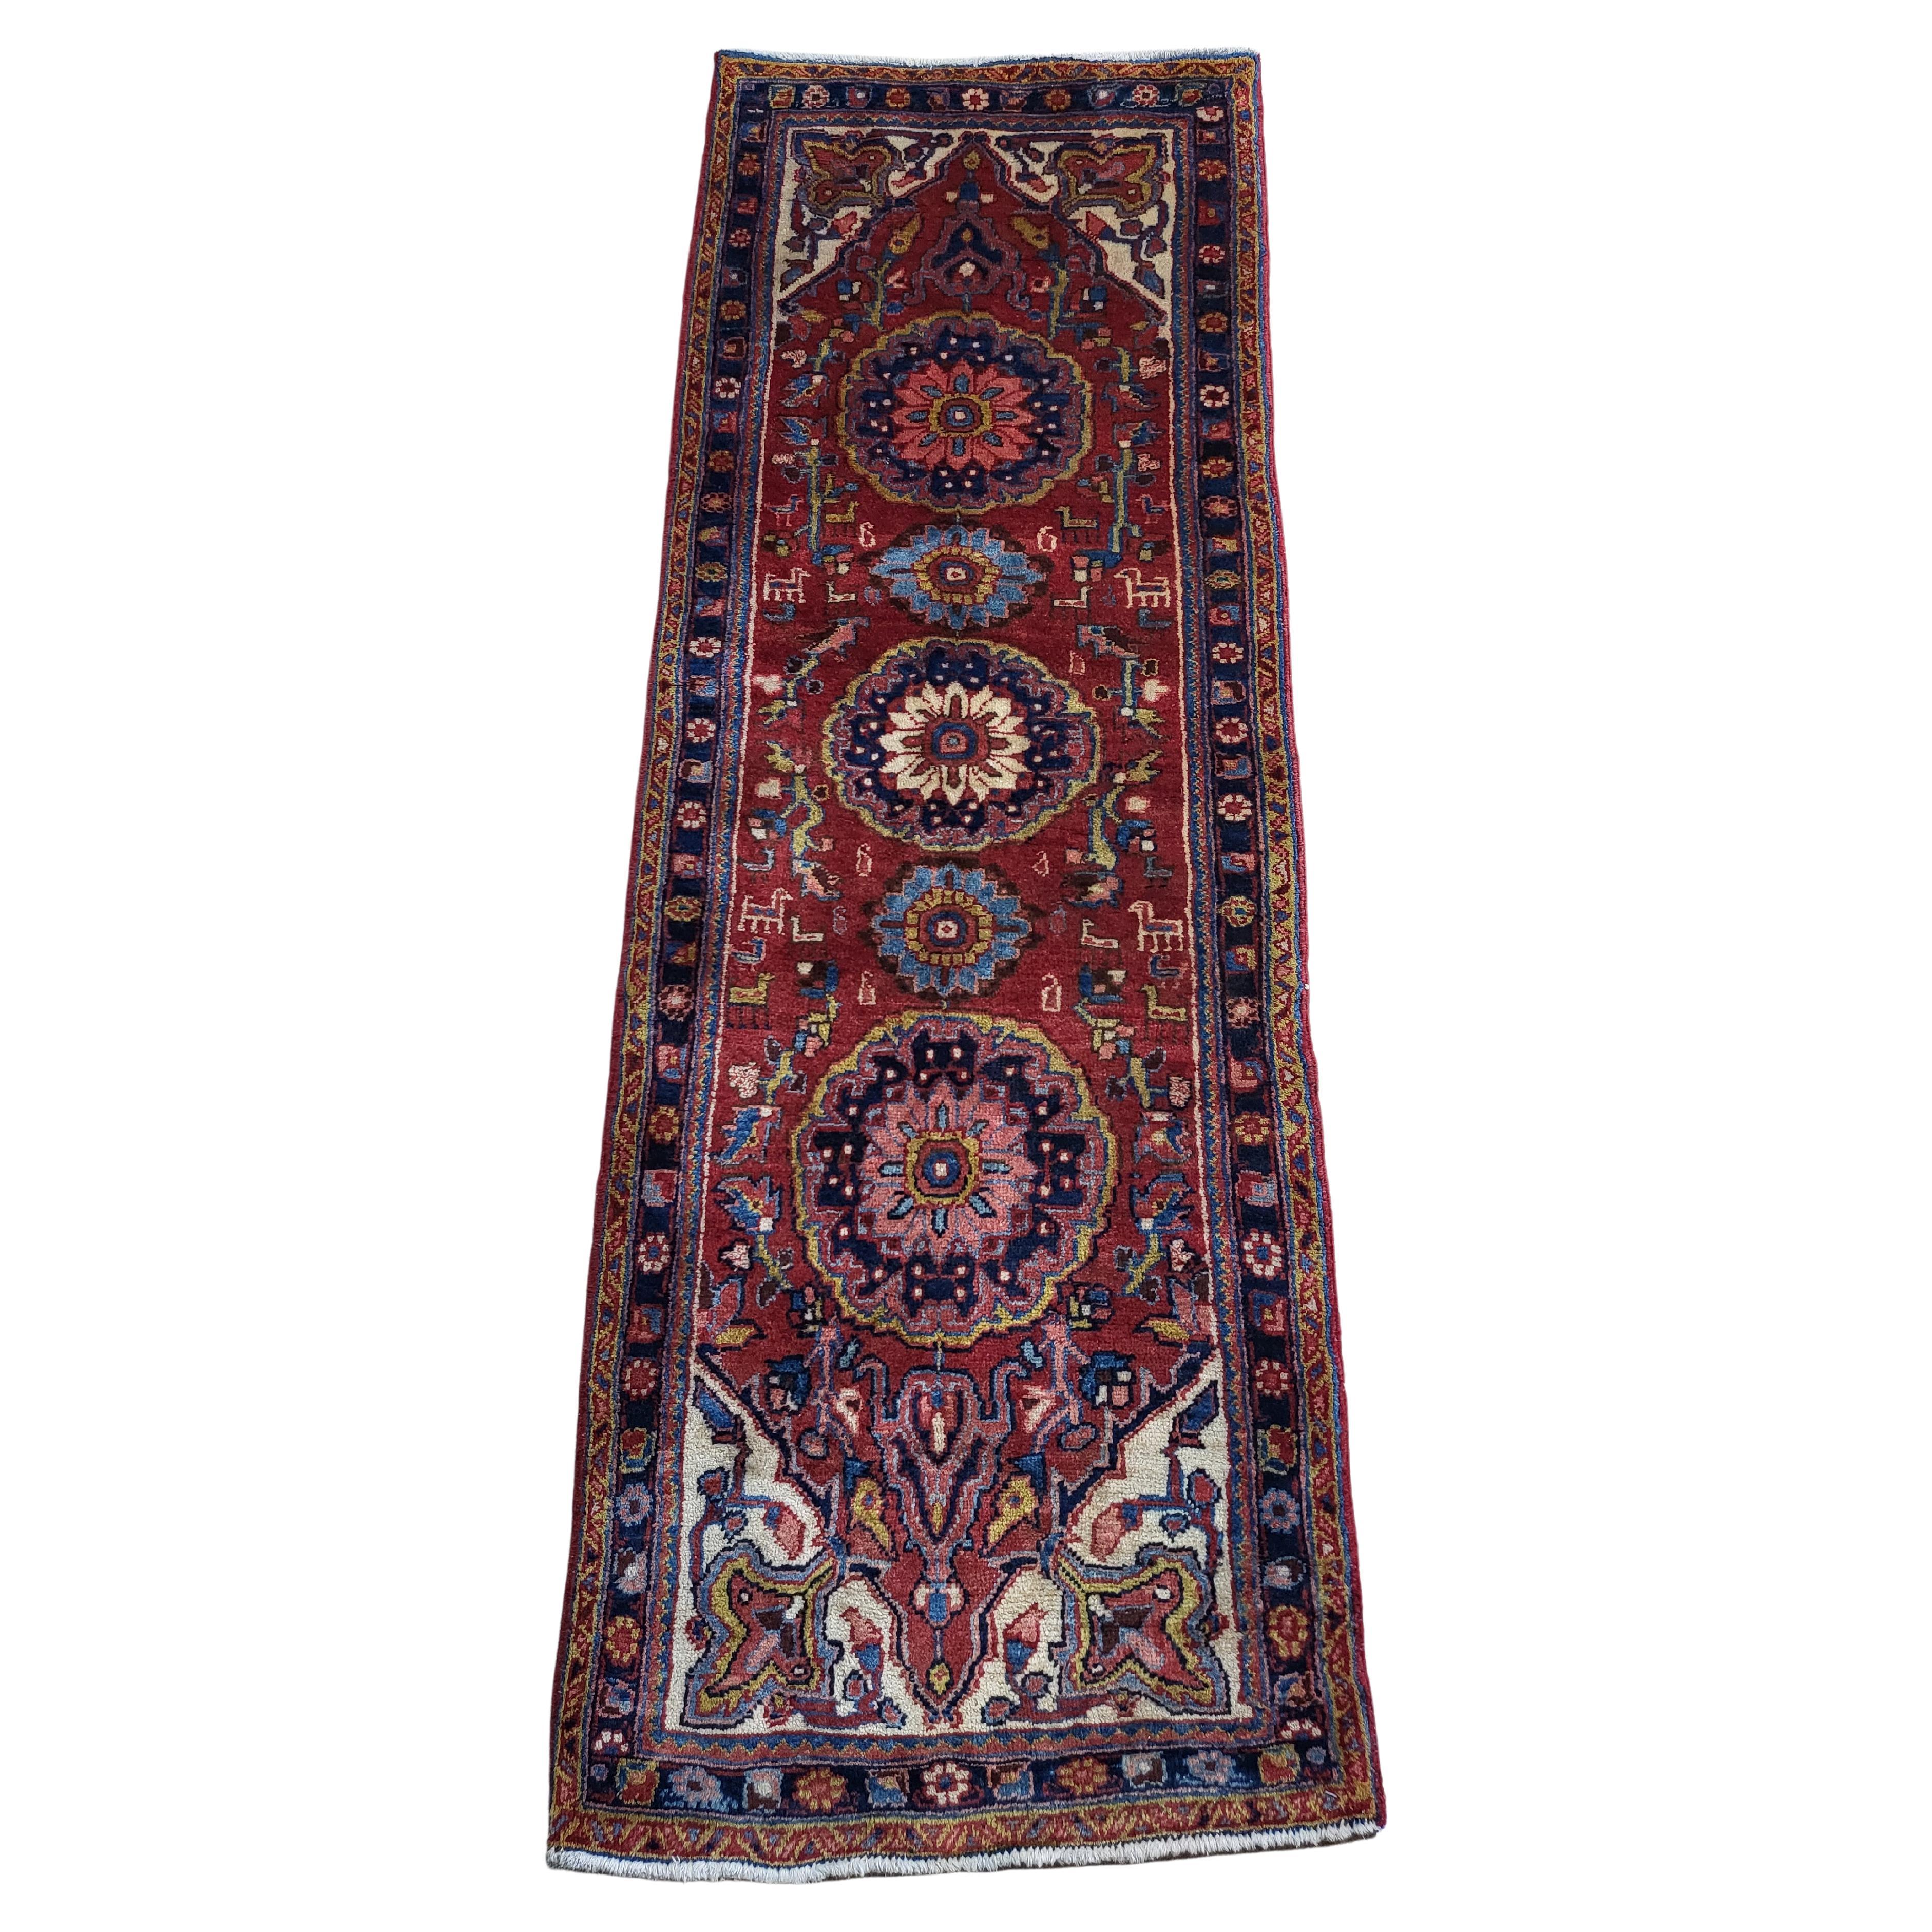 Tapis de couloir persan Heriz / Serapi vintage, russe, crème, bleu, motif tribal/animal